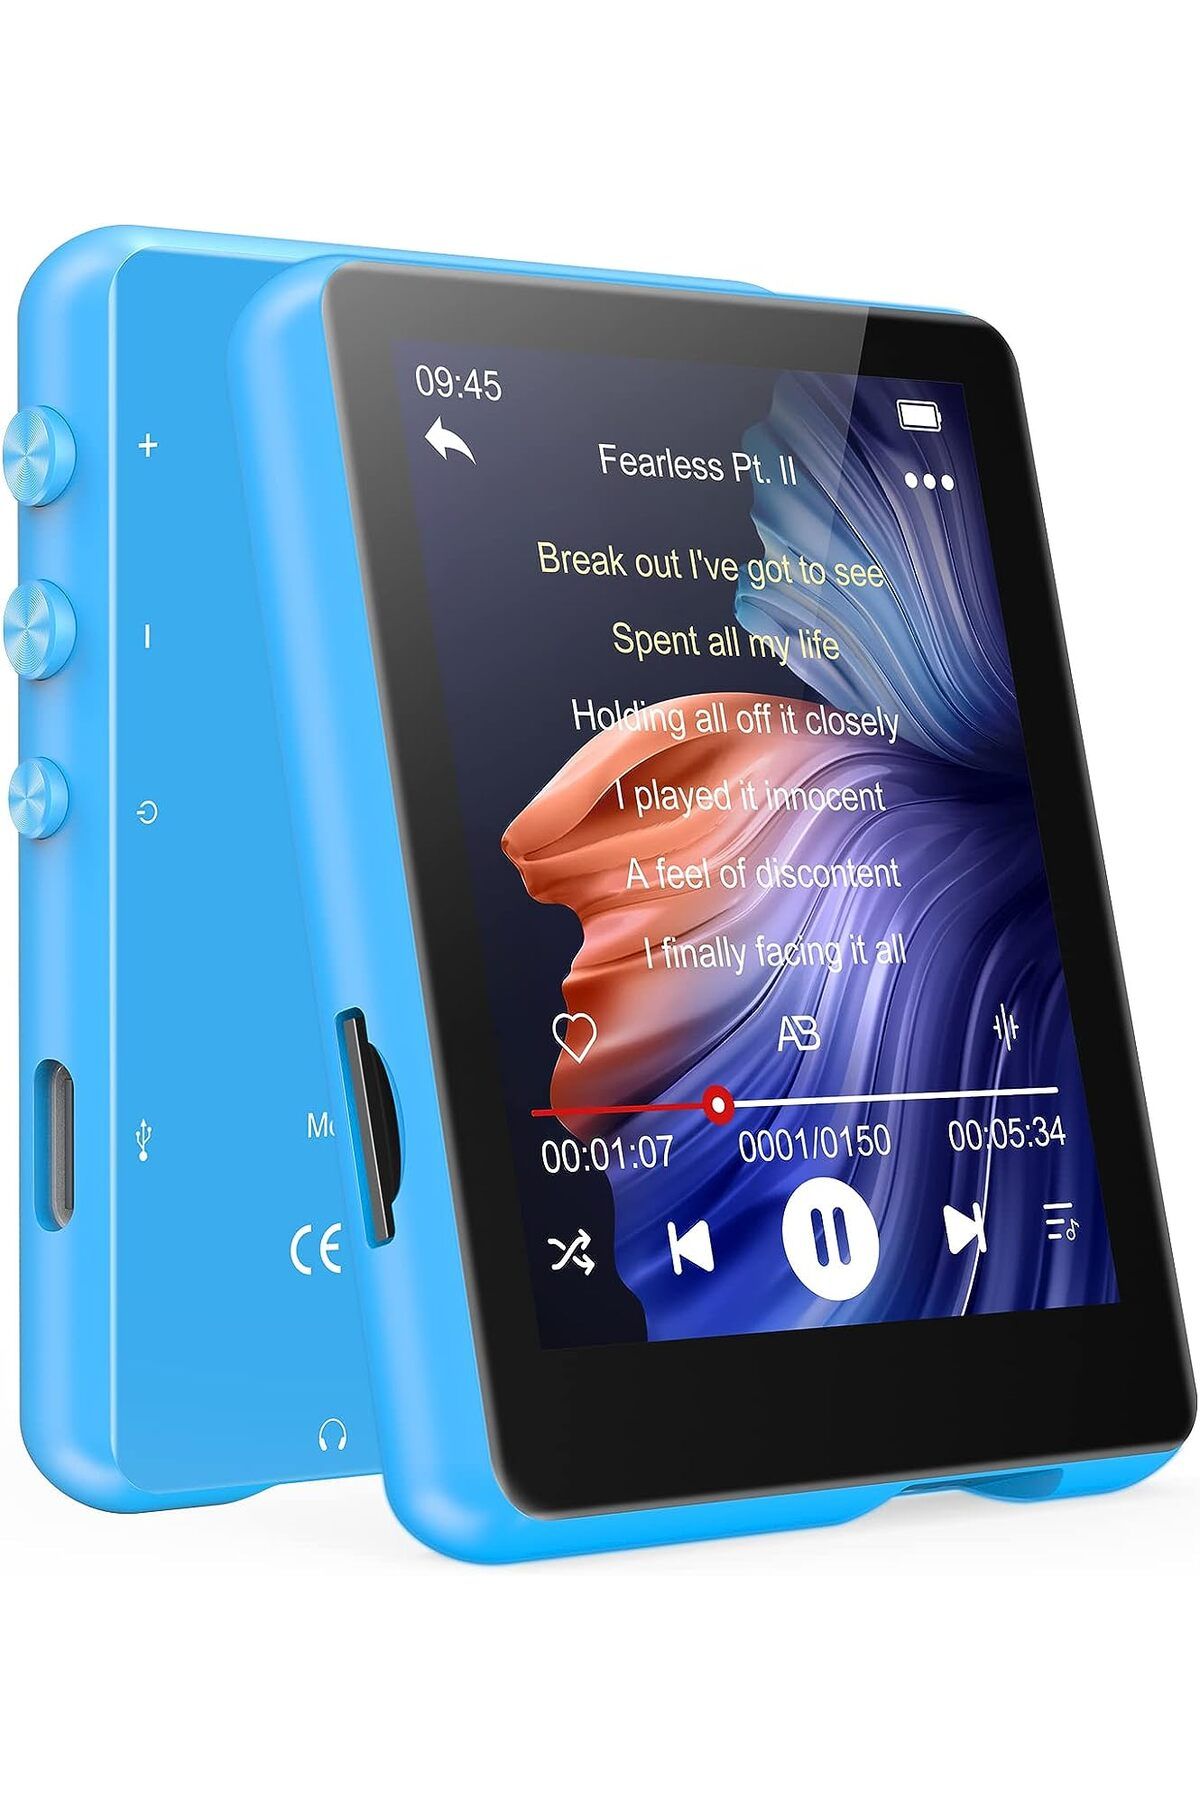 MECHEN Bluetooth 5.0 ile 32GB MP3 Çalar 2,4" Renkli Ekran, Taşınabilir HiFi Ses, FM Radyo, Hoparlör TF Kart